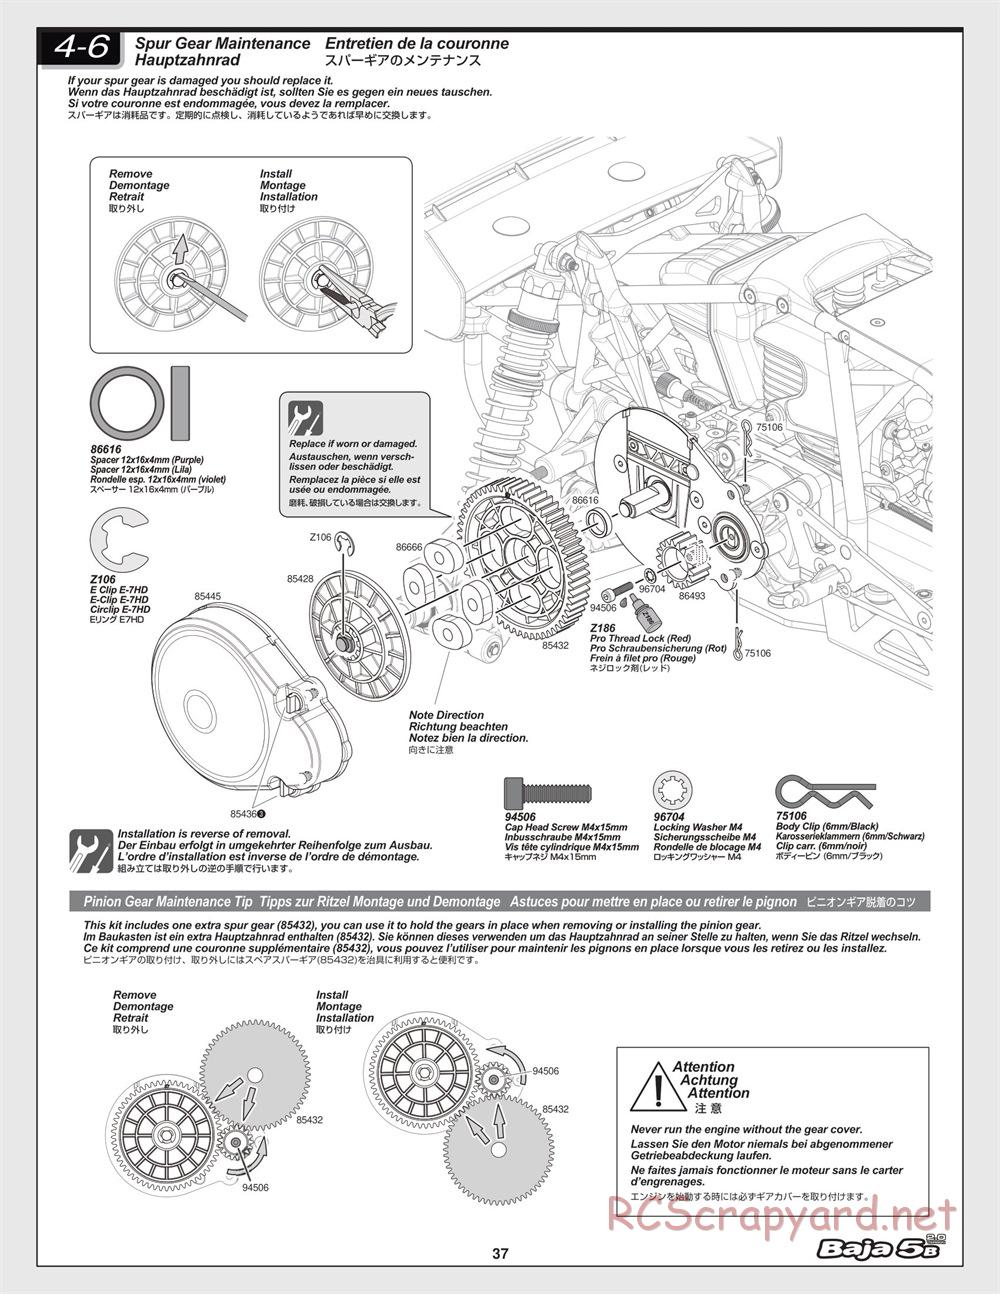 HPI - Baja 5B 2.0 - Manual - Page 37